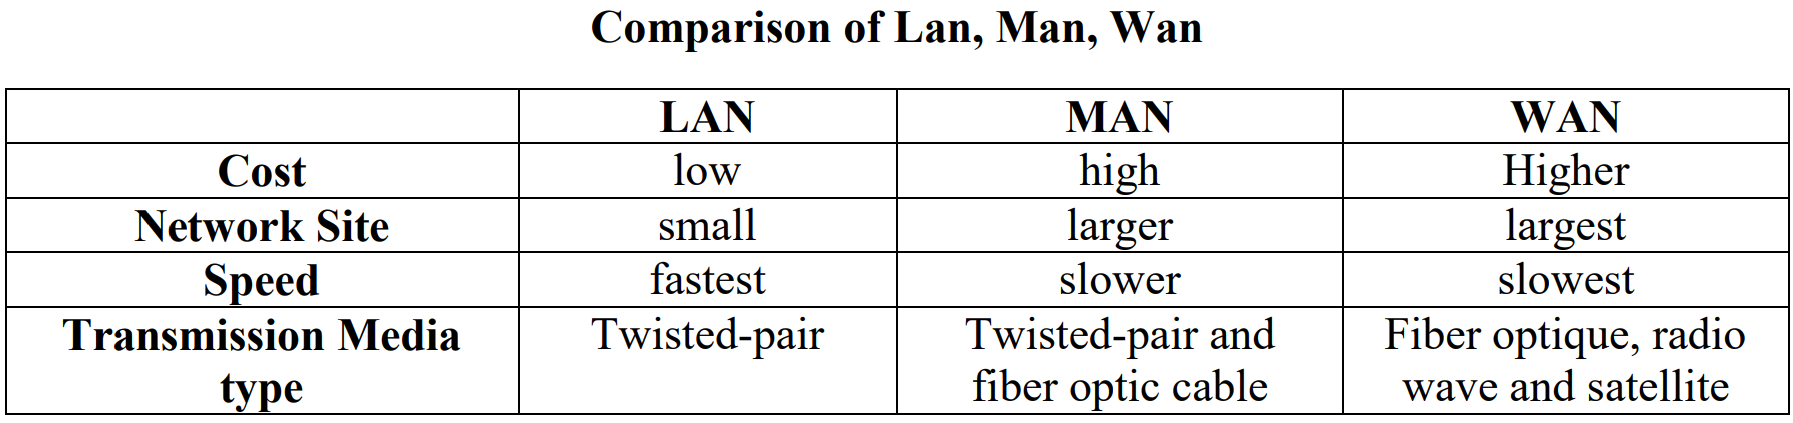 comparison table of Lan, Wan, Man